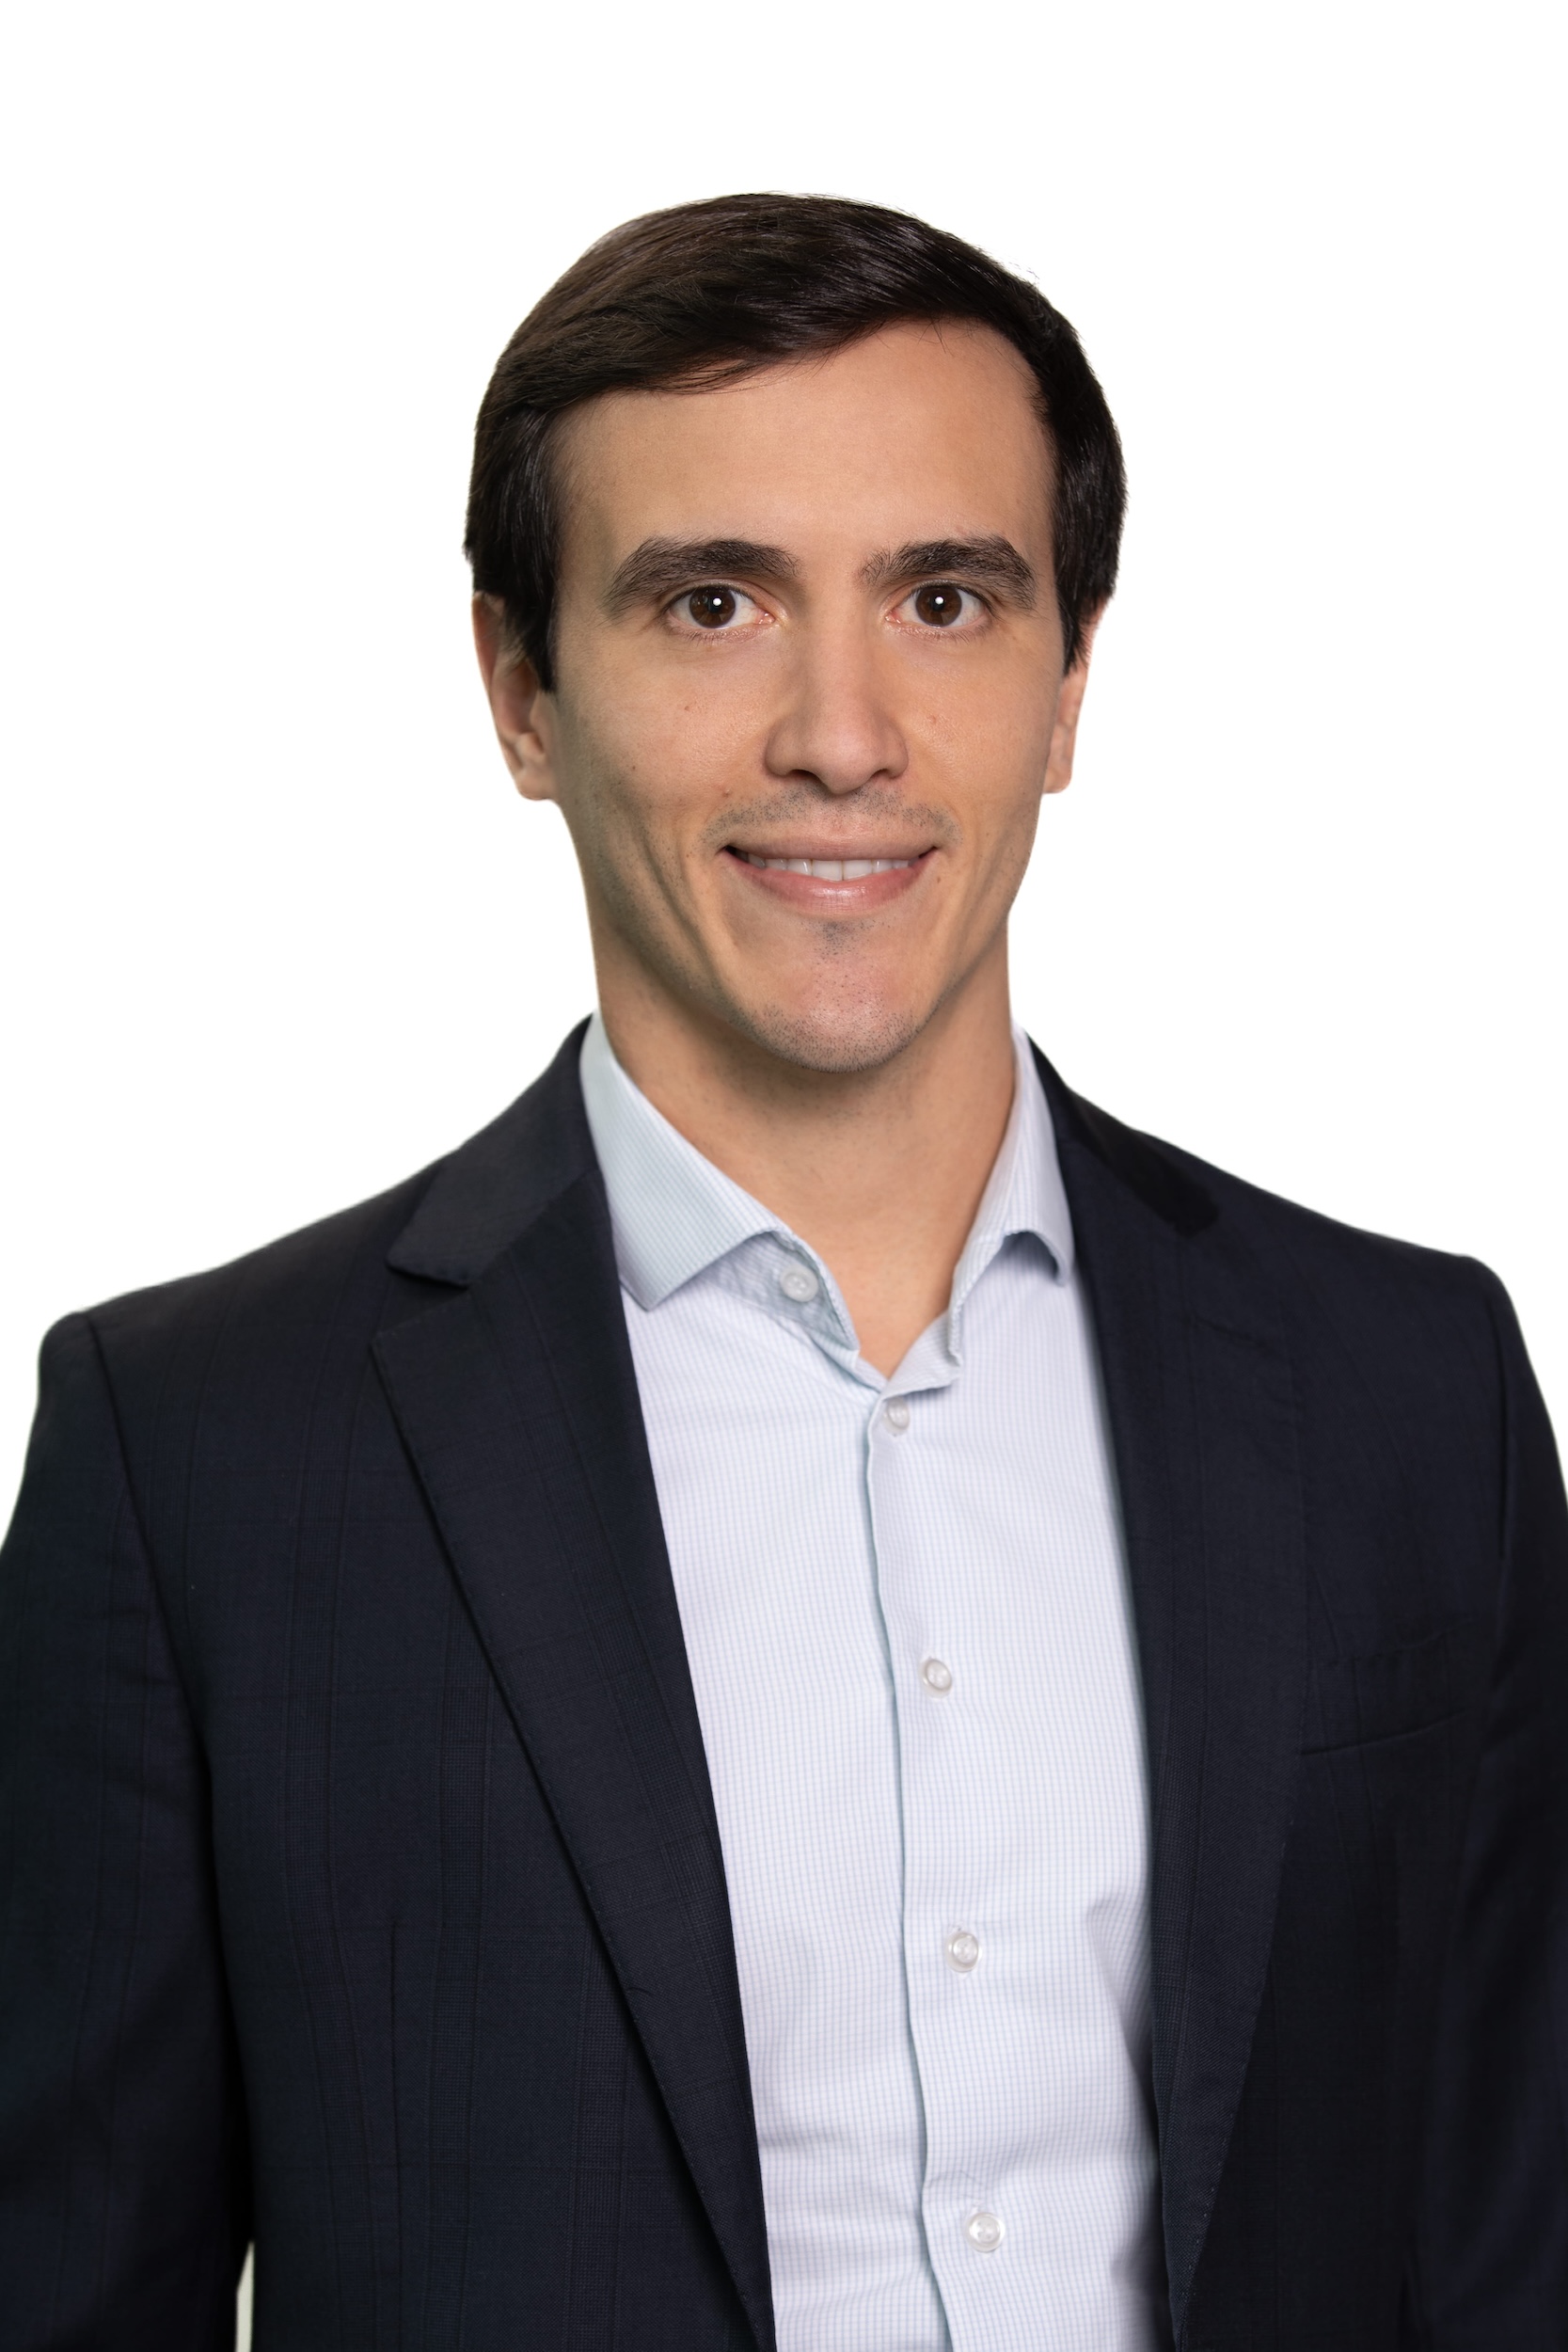 Gabriel Marcassa, a partner at Volpe Capital